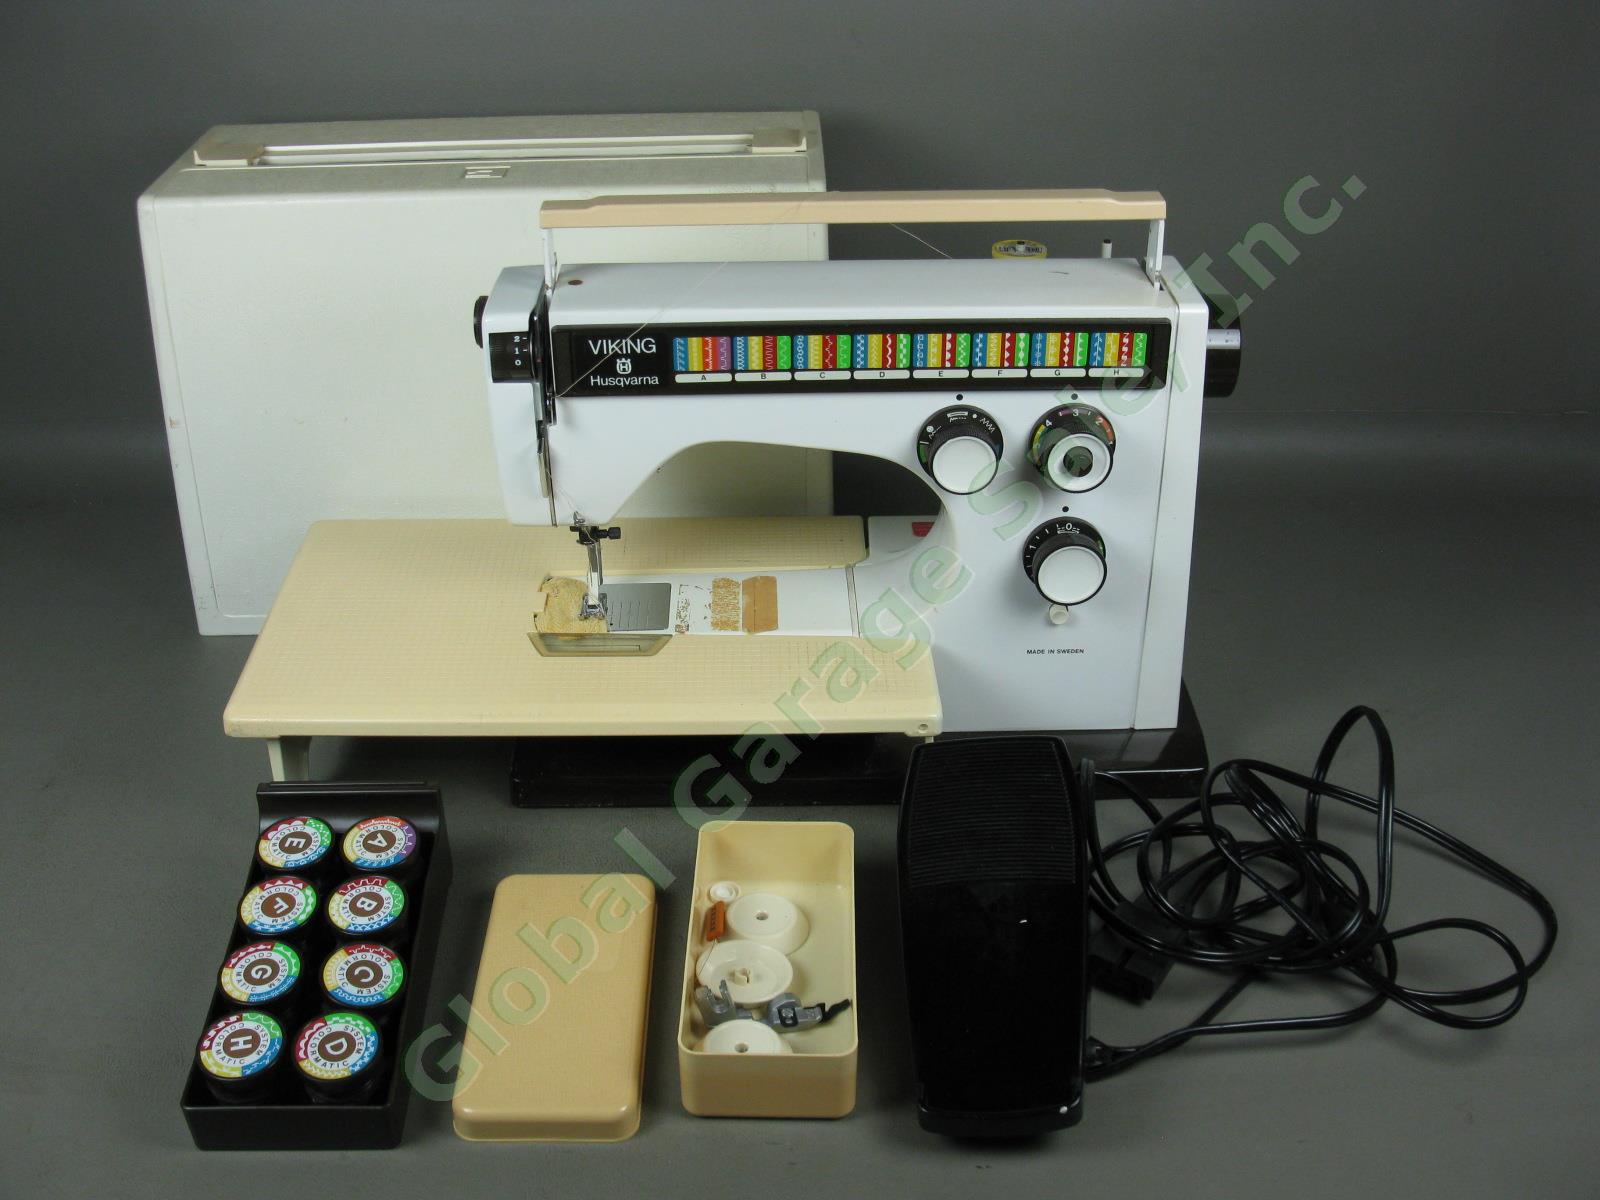 Viking Husqvarna 6460 Sewing Machine W/ 8 Colormatic Cams Pedal Case Bundle Lot